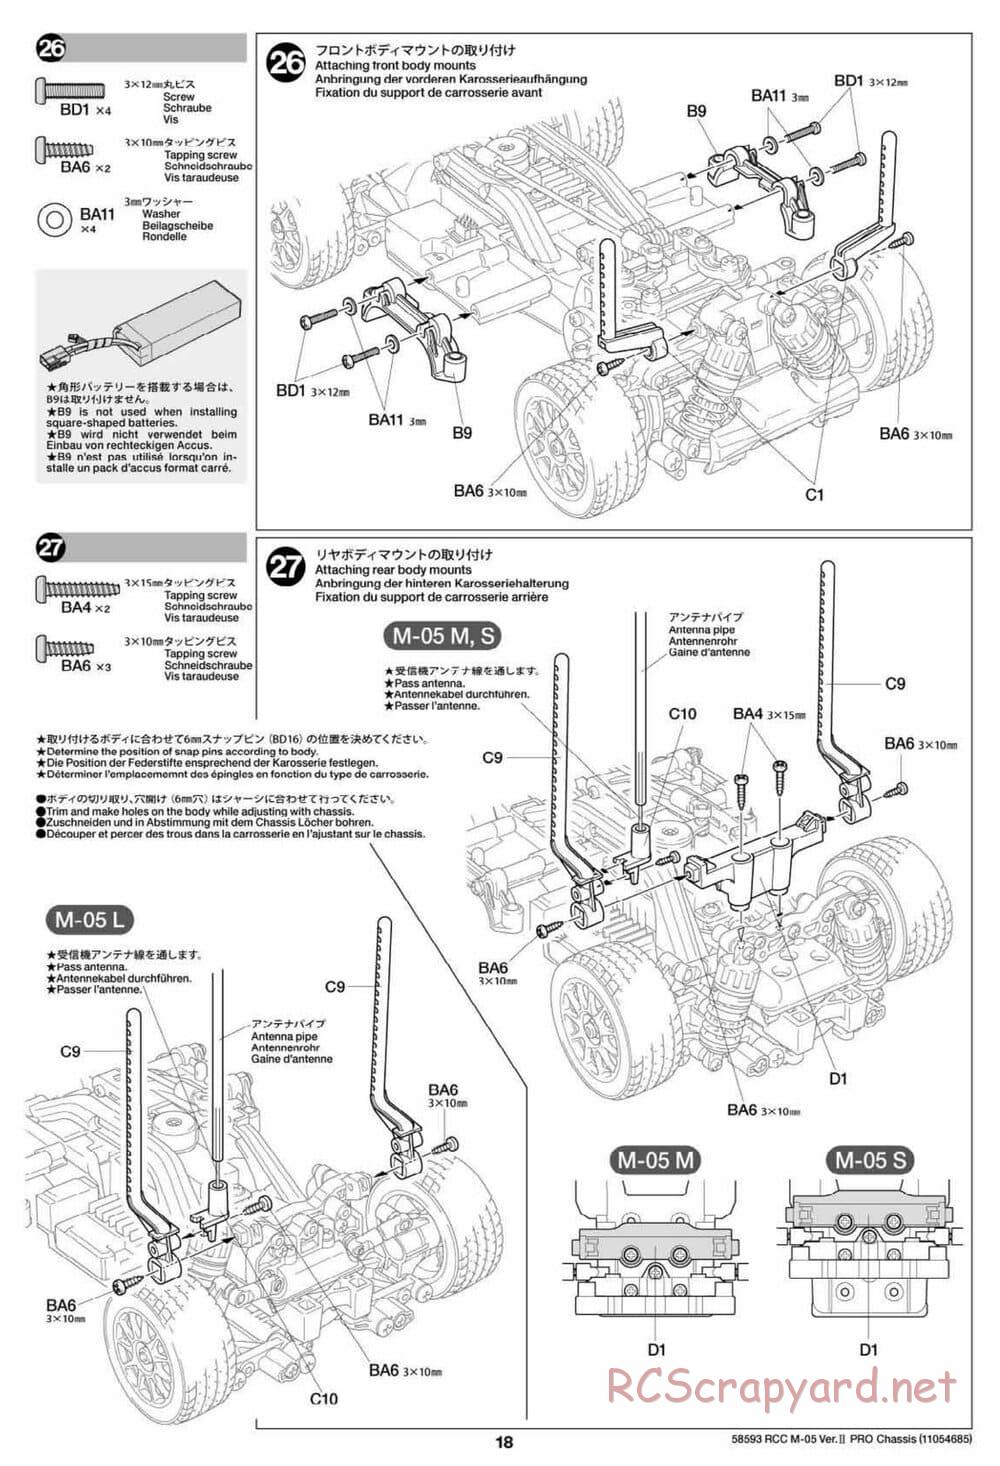 Tamiya - M-05 Ver.II Pro Chassis - Manual - Page 18